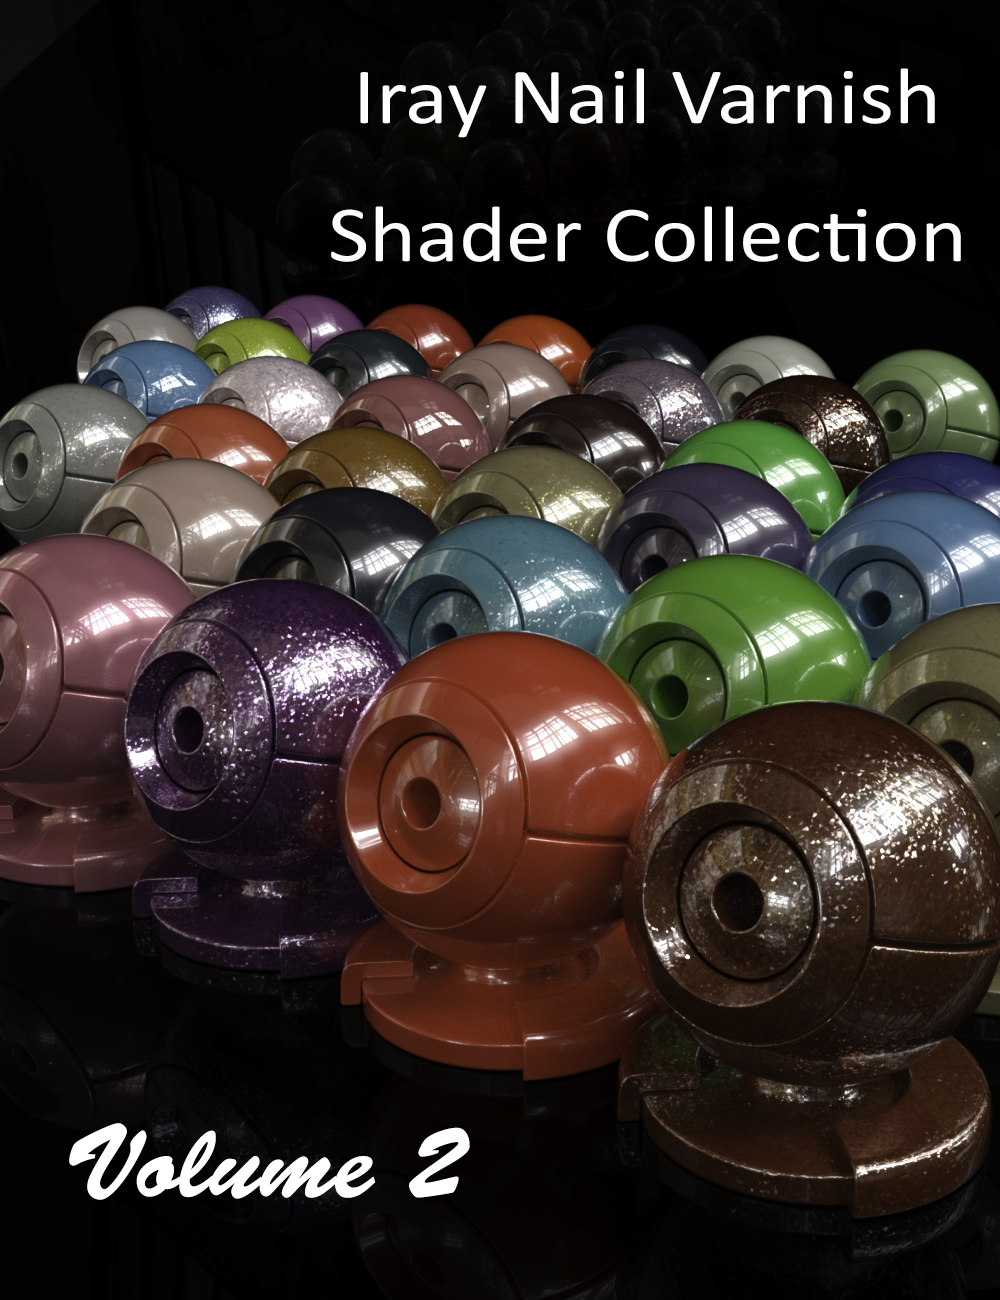 Iray Nail Varnish Shaders Volume 2 by: Serum, 3D Models by Daz 3D